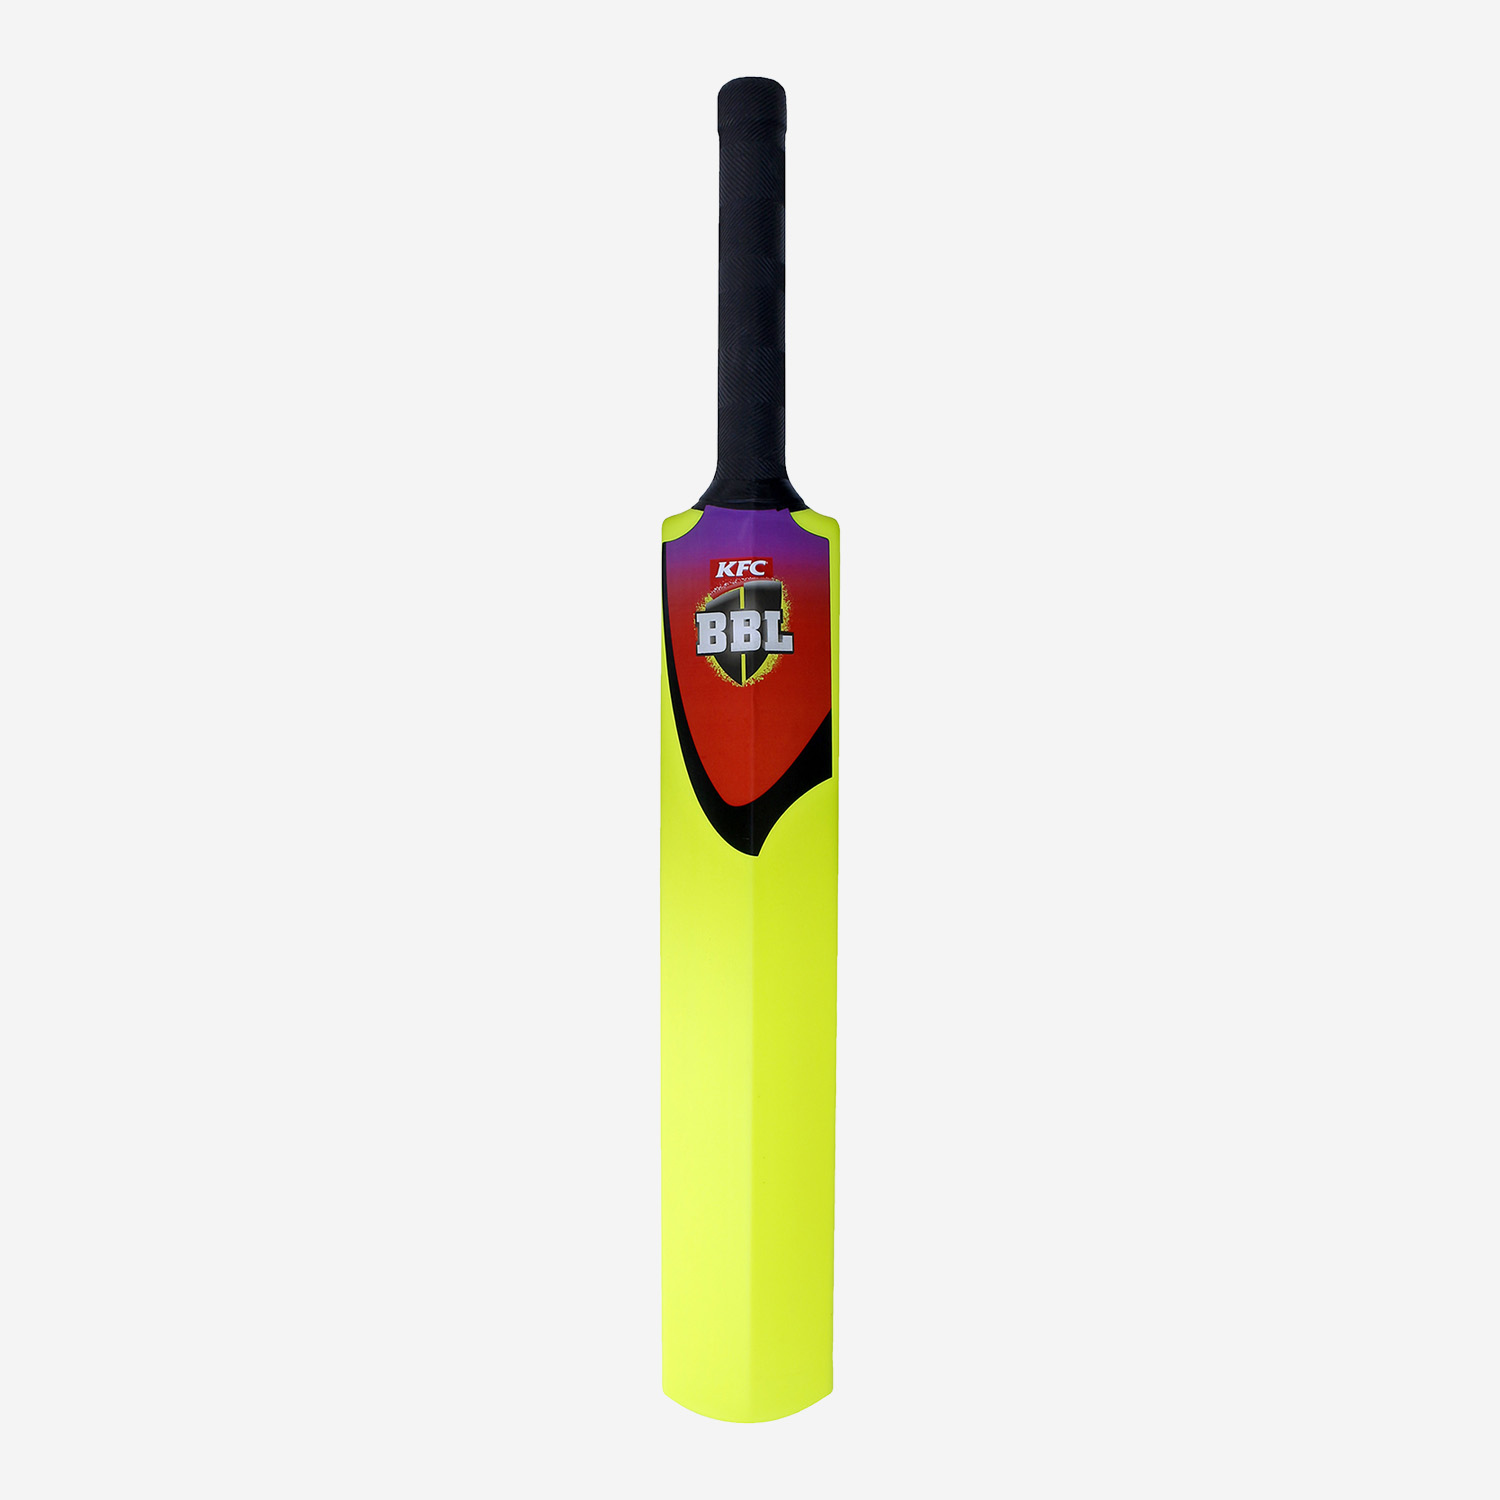 BBL mini cricket set